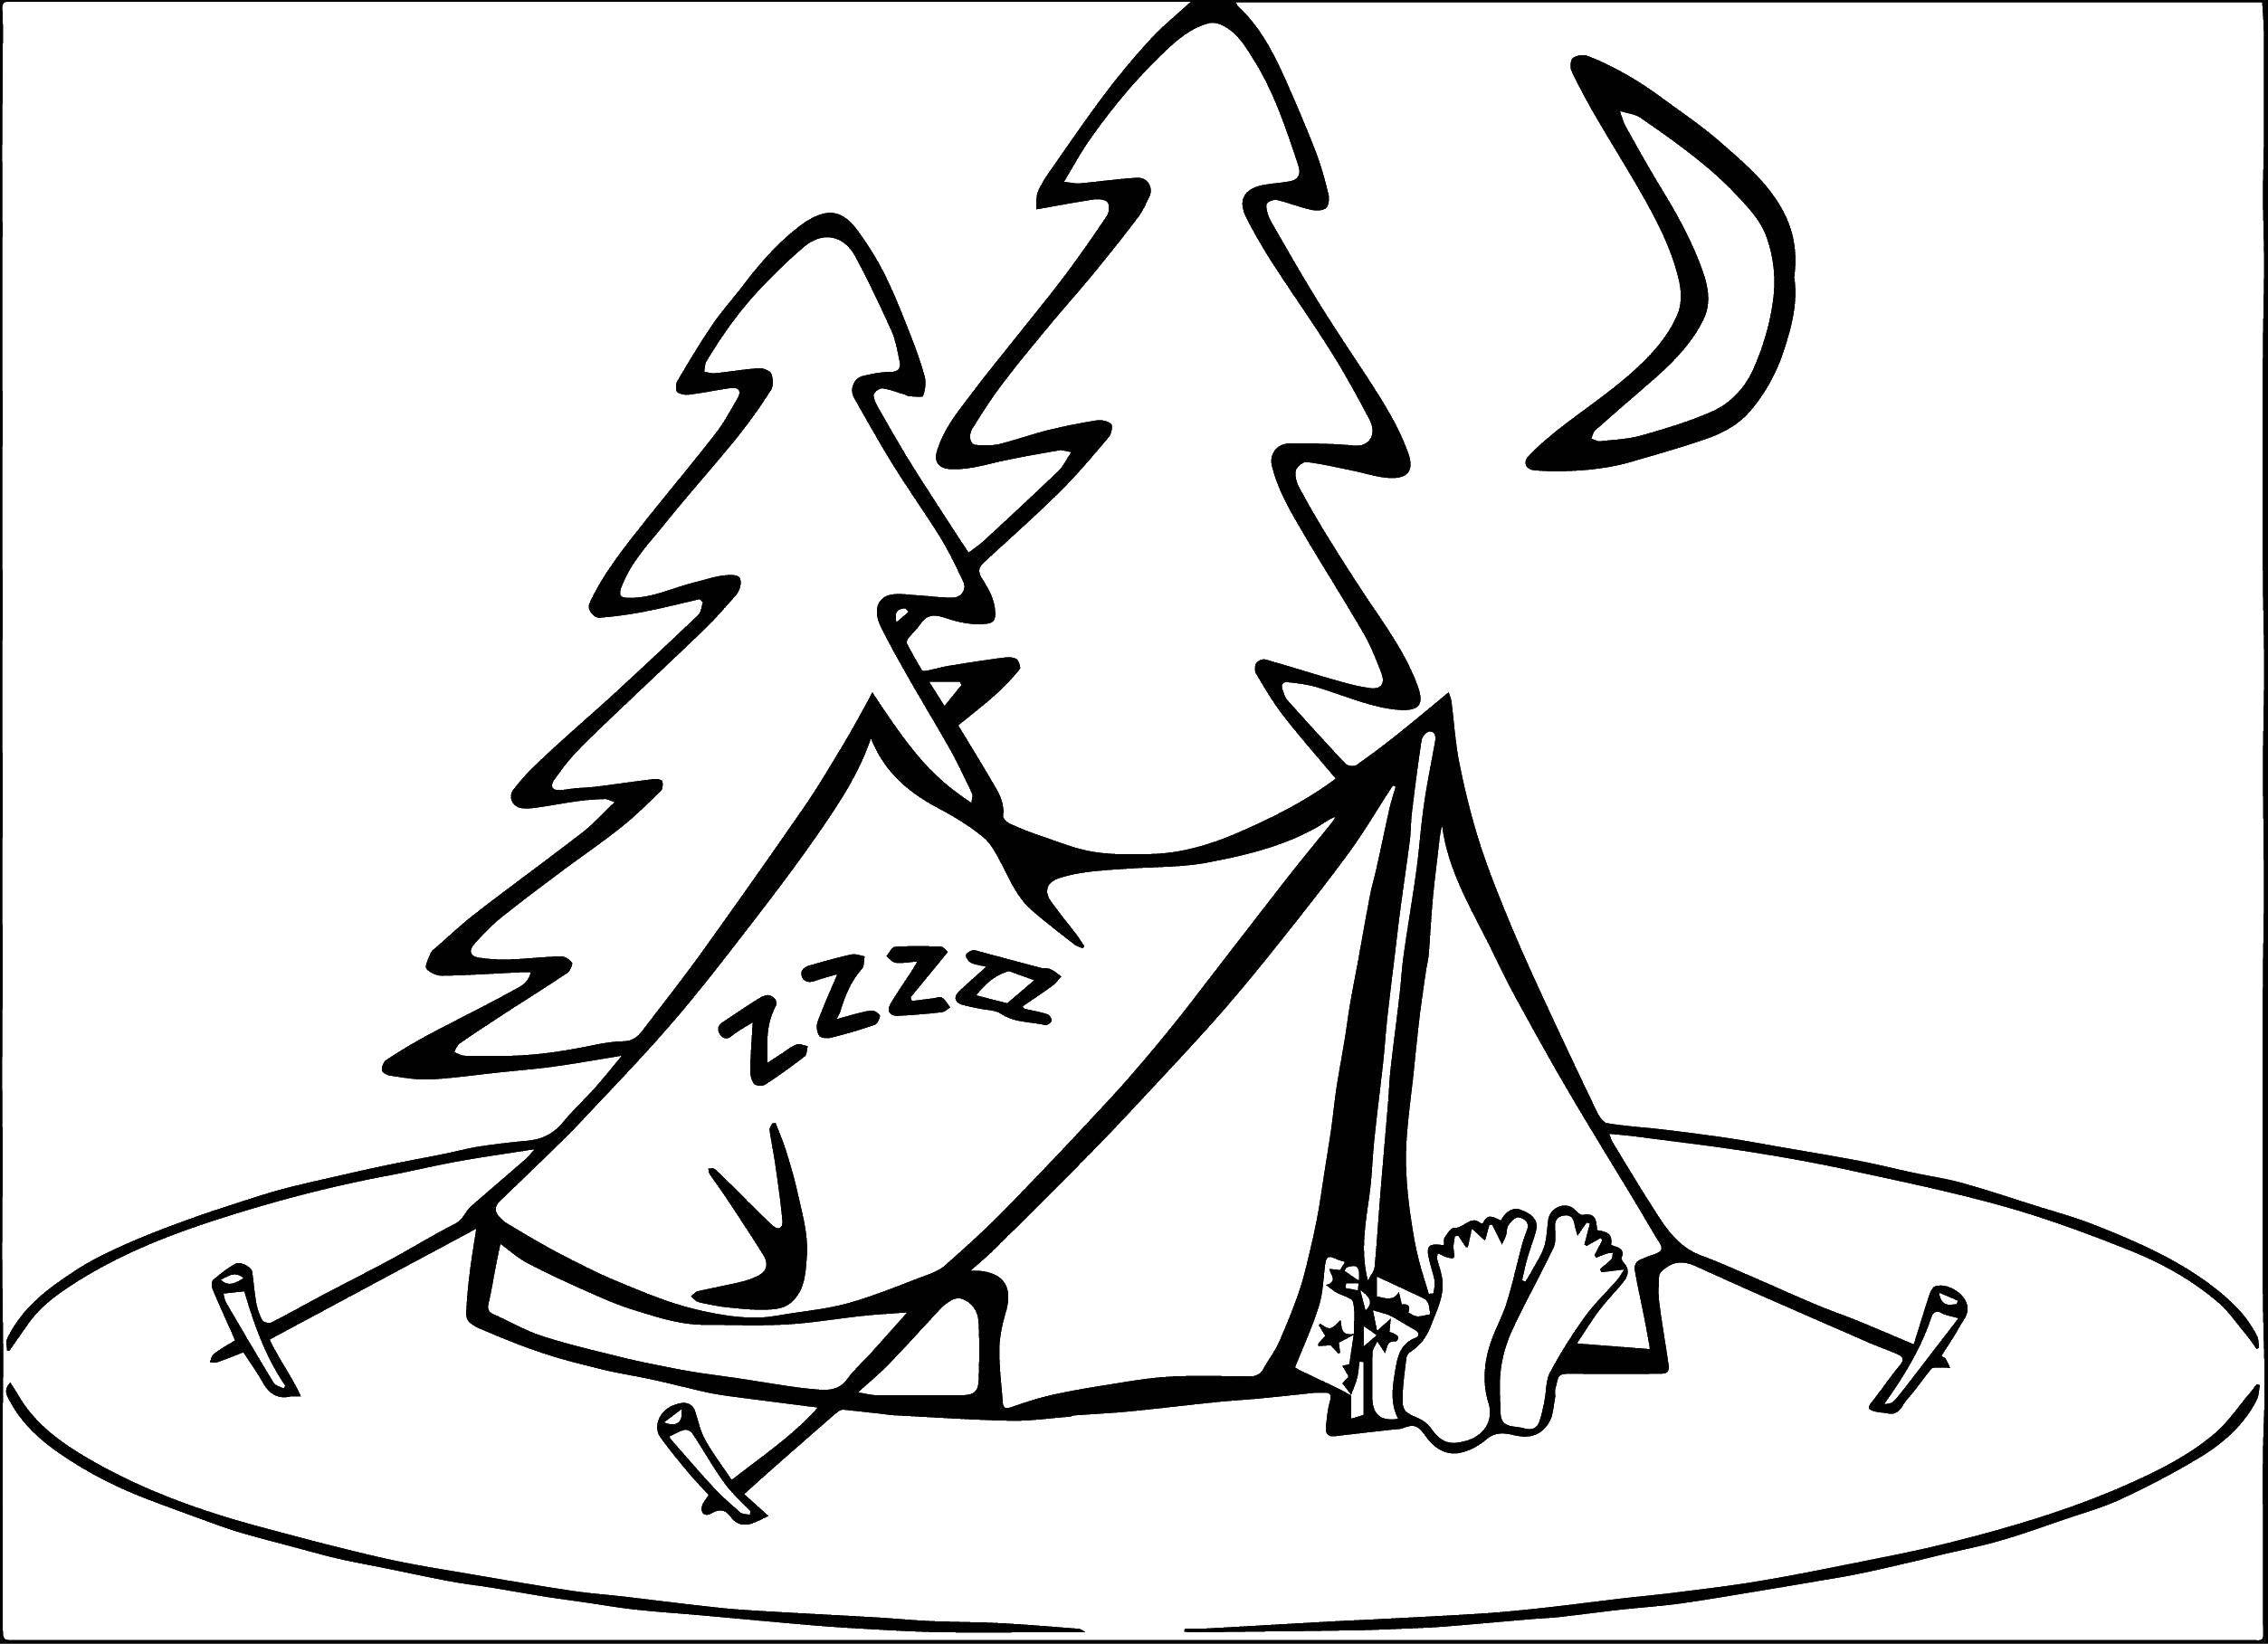 Coloring Sleep in a tent. Category Sleep. Tags:  Sleep, fatigue.